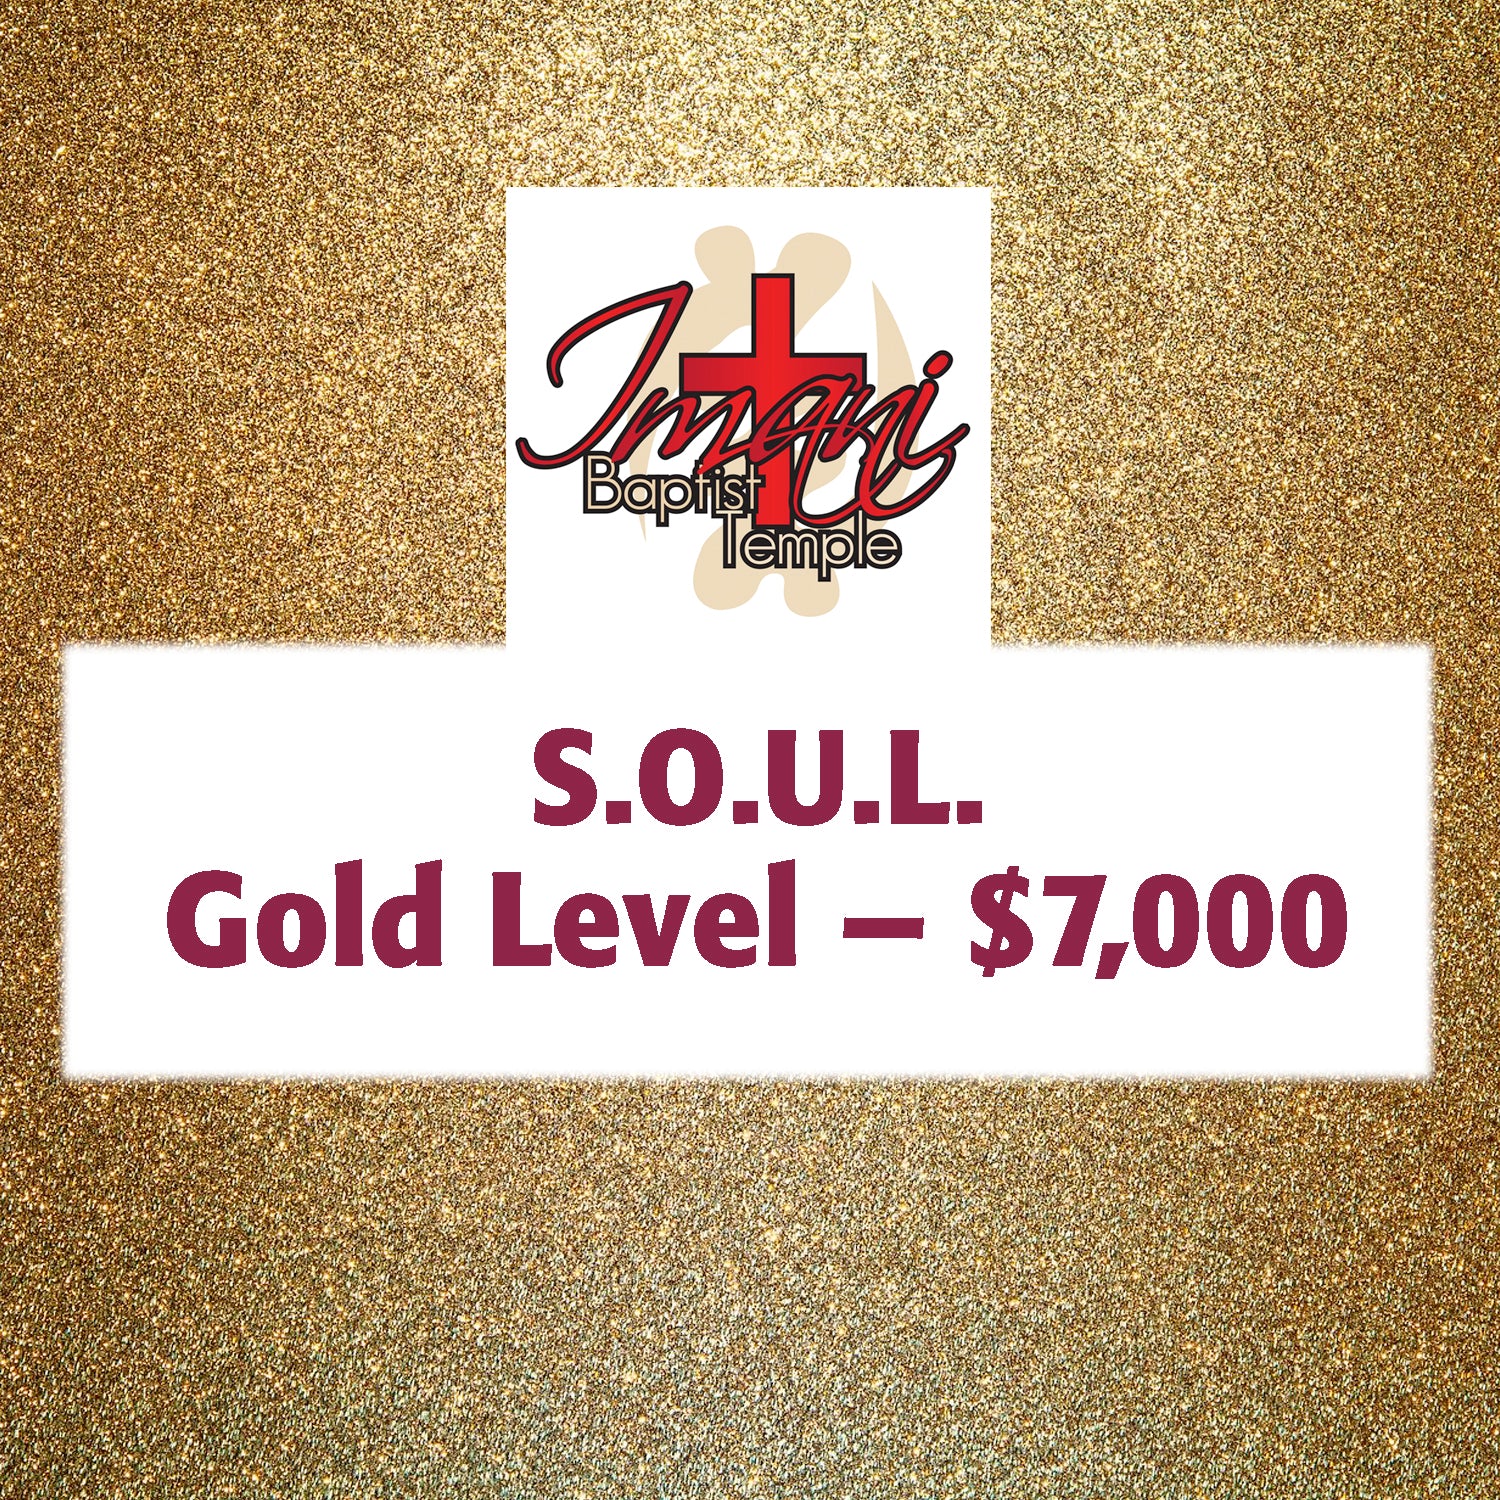 Gold Level - $7,000